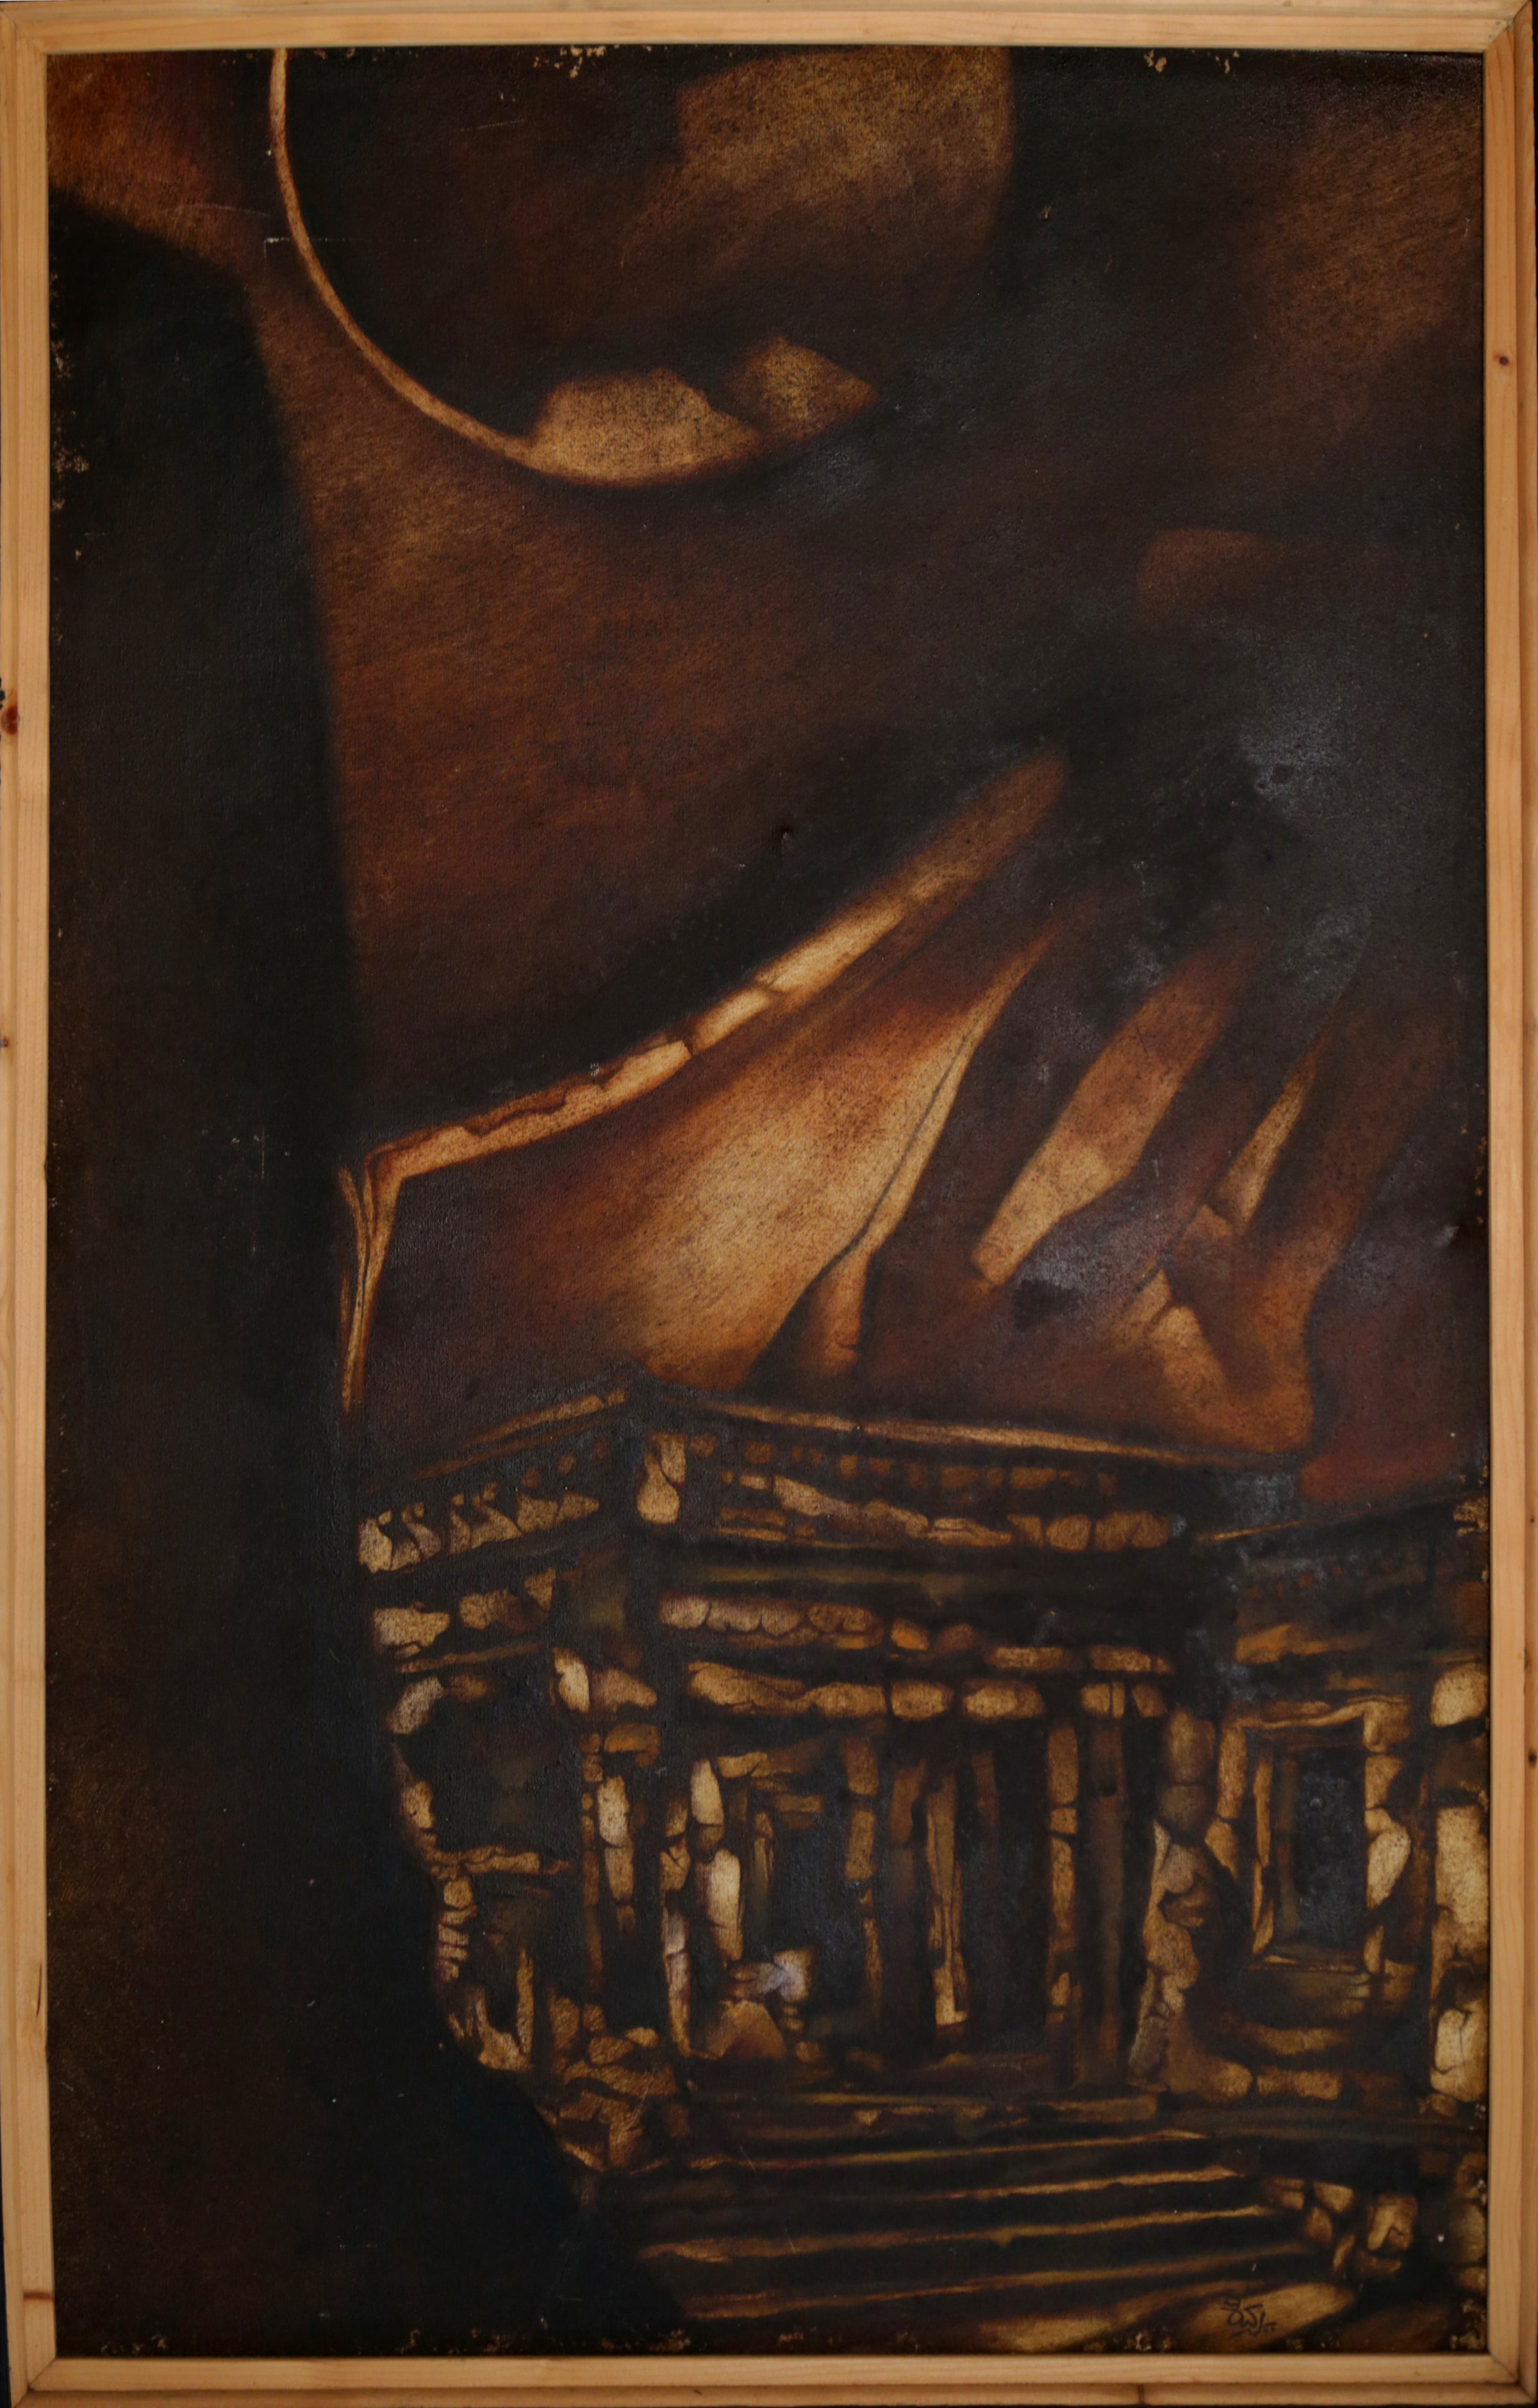 HAMPI AT NIGHT (2) by Sathya Shivakumar | A Contemporary art - Oil painting on canvas